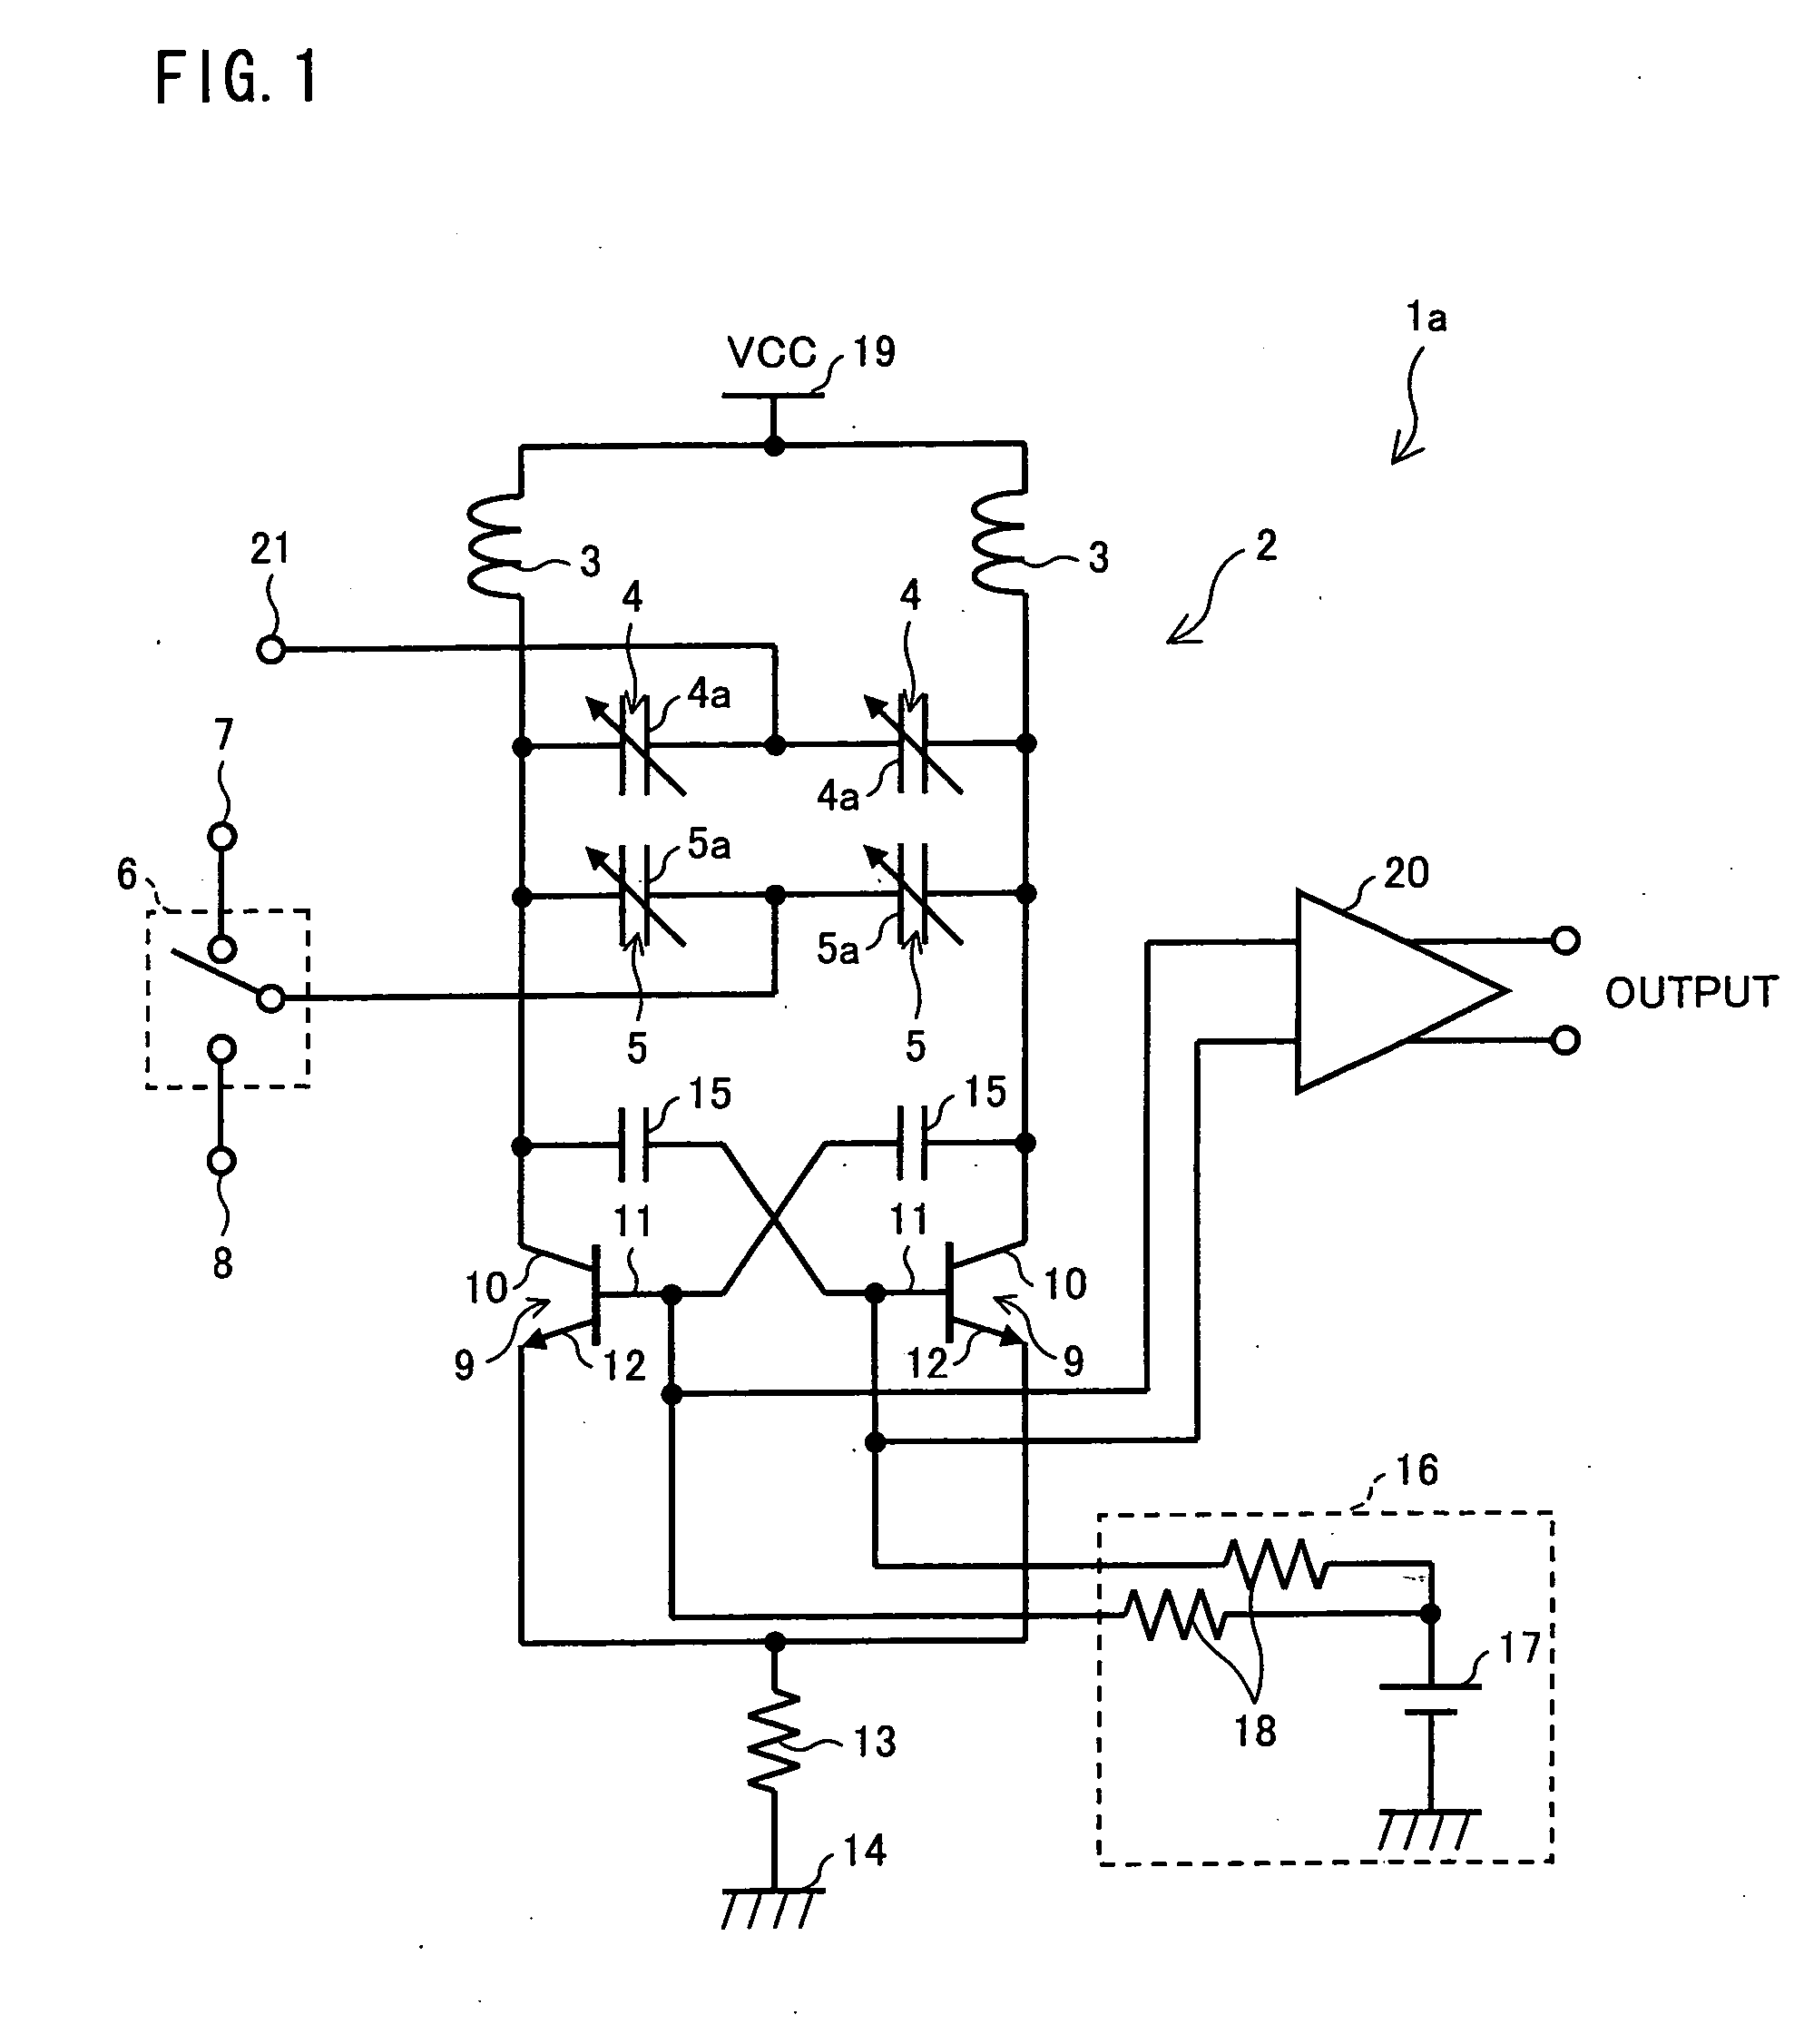 Voltage control oscillator and voltage control oscillator unit